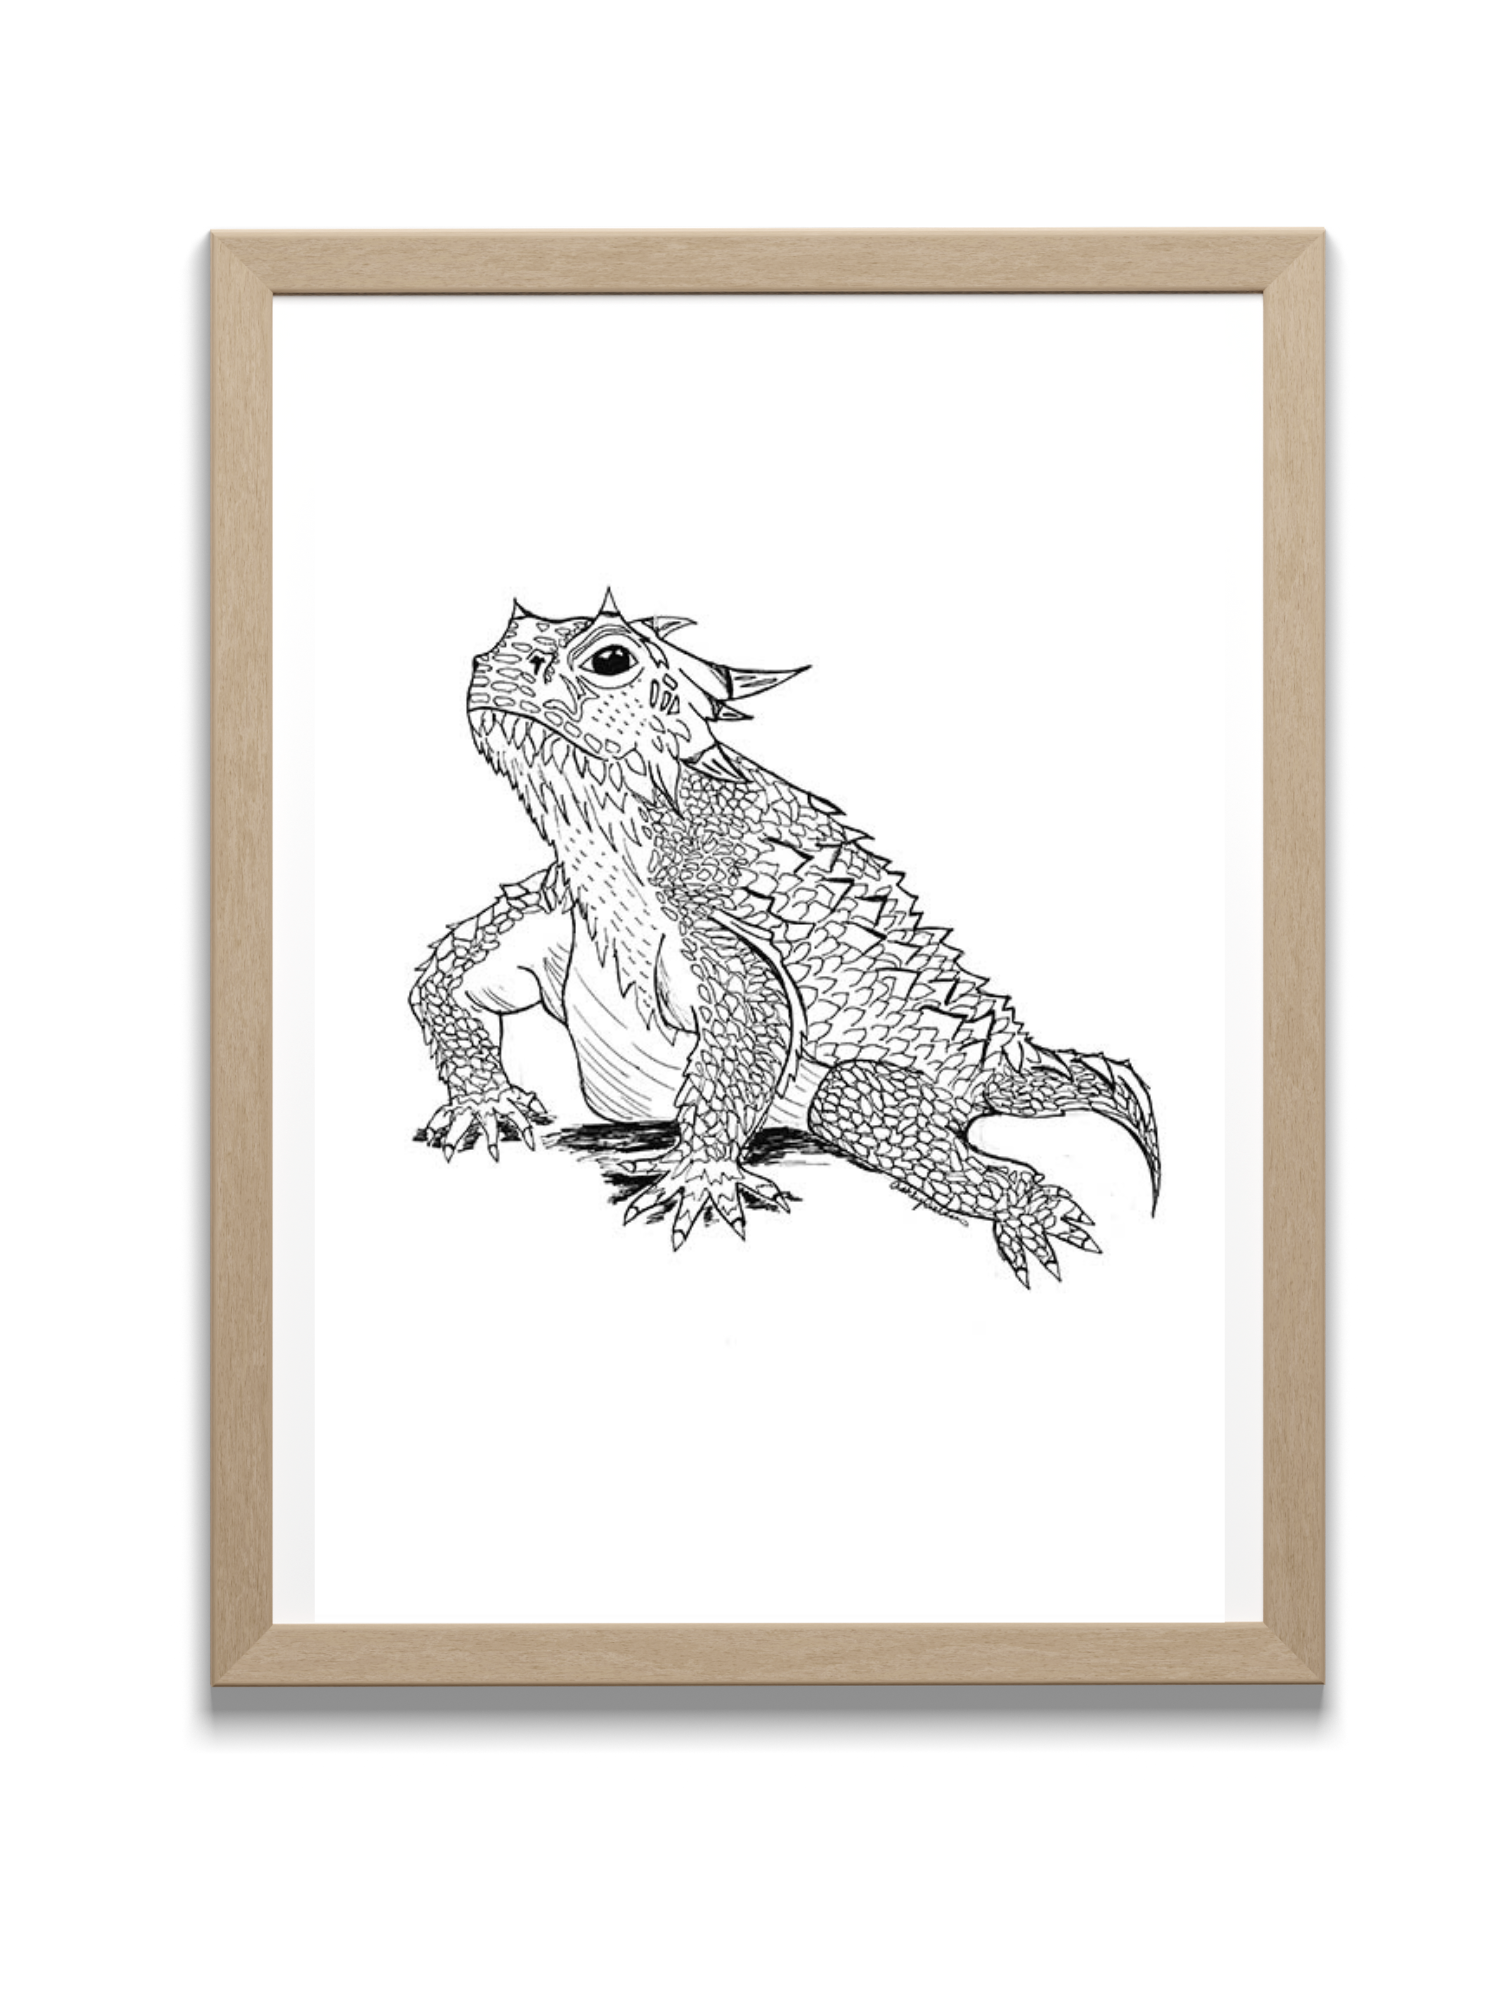 Horned Toad Sketch - Original Art Print